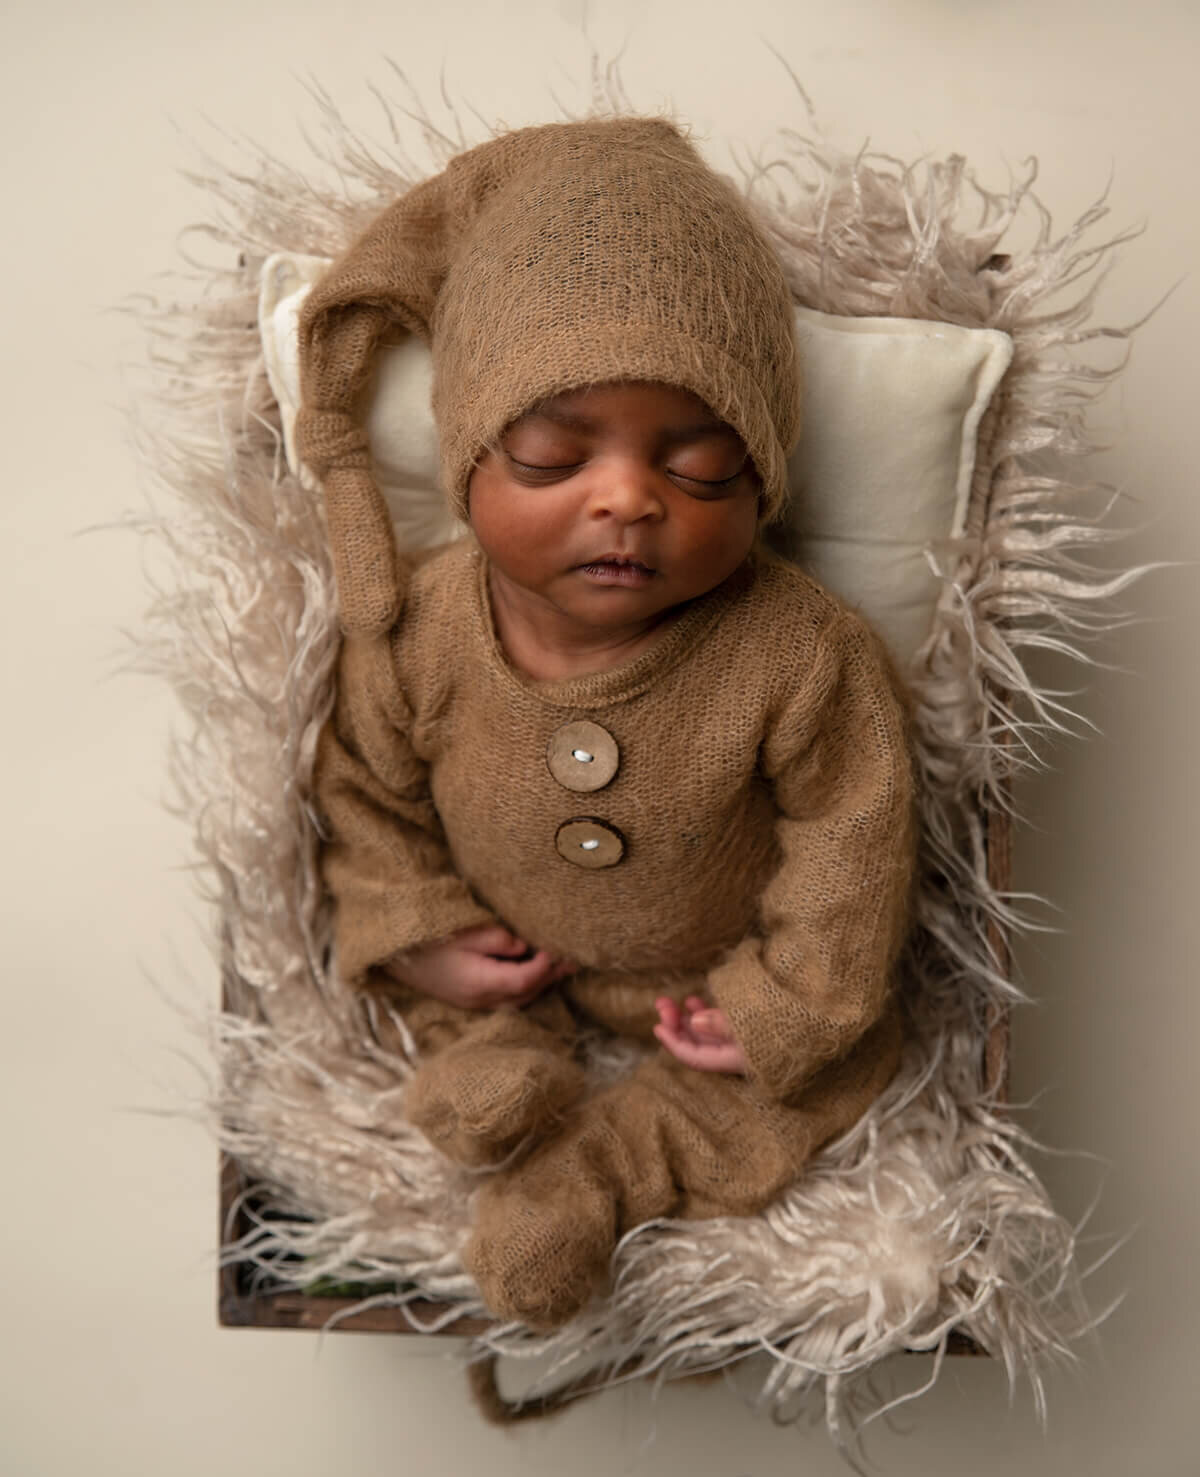 newborn baby wearing a brown romper